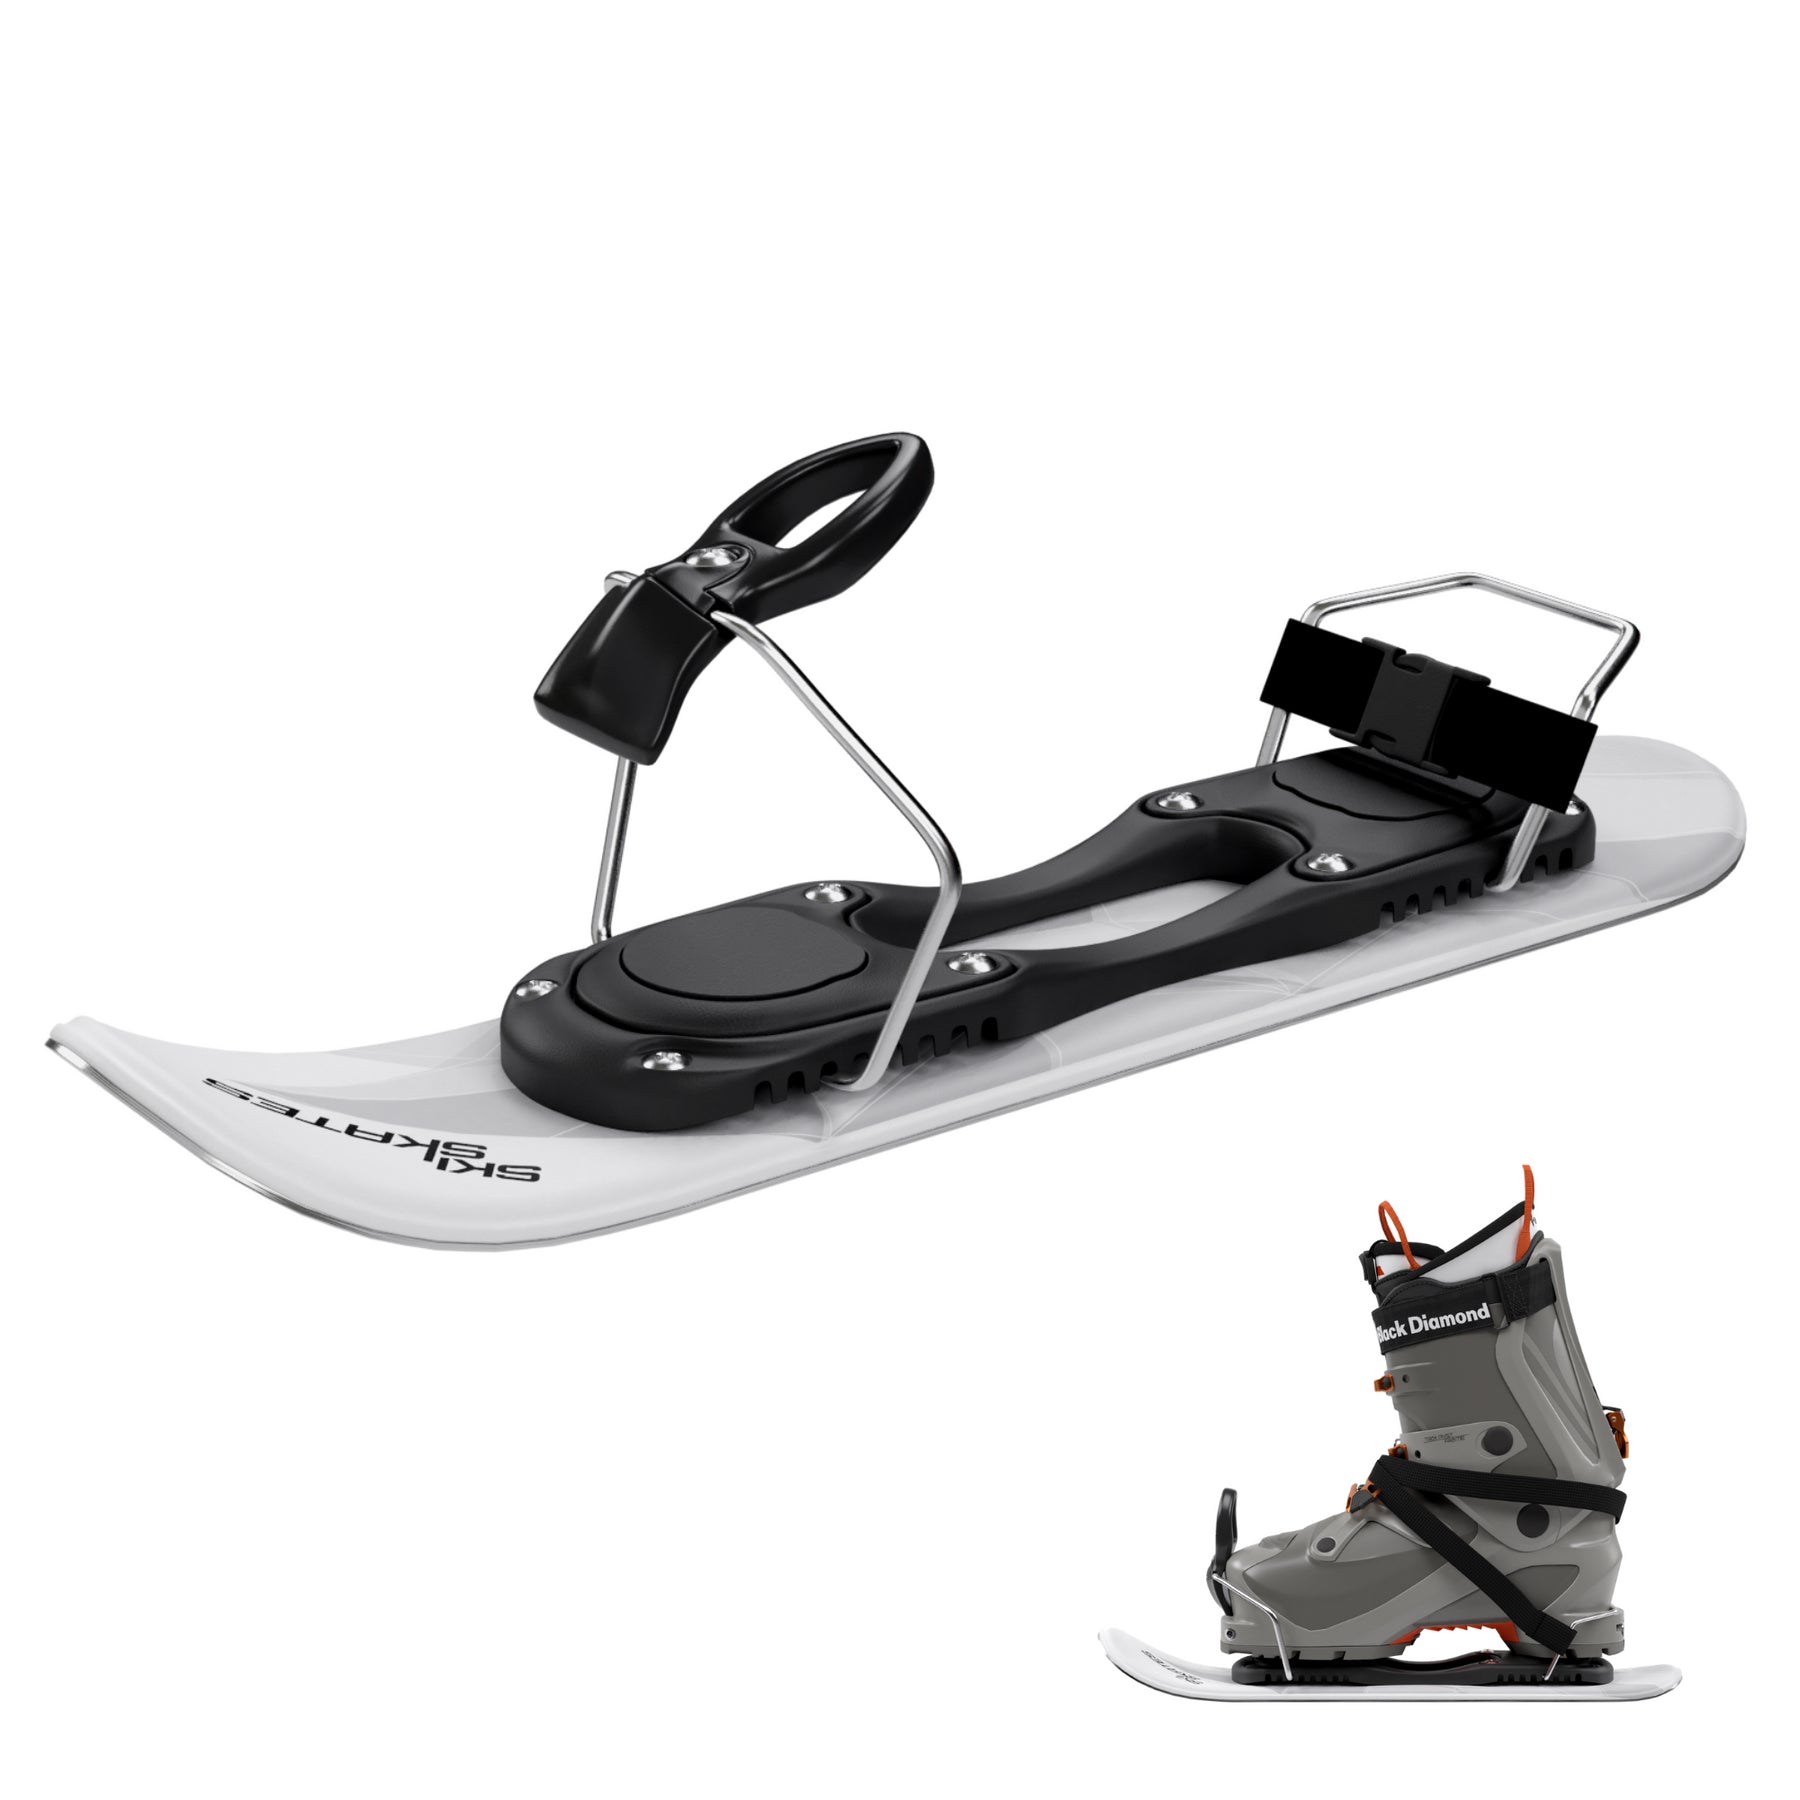 Skiskates - Mini Skis - Official Website - Reviews | Price $299.90 ...